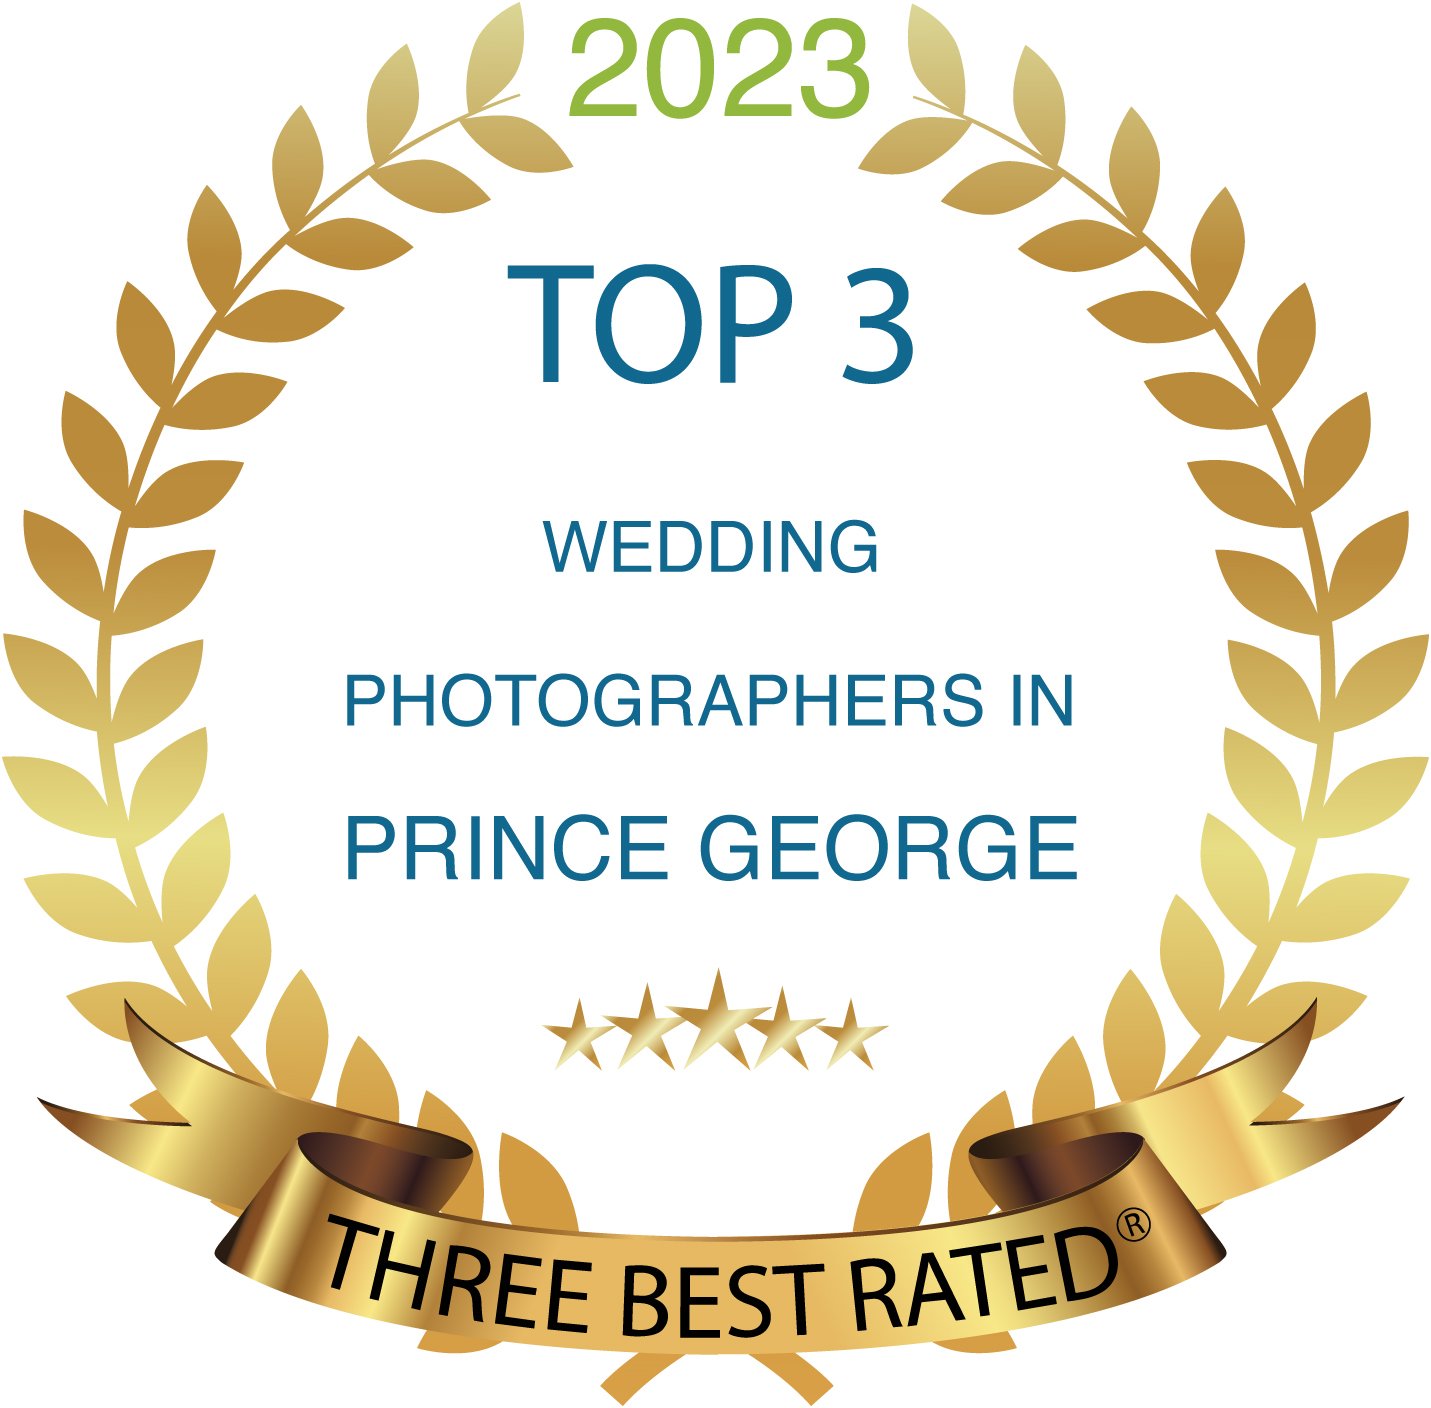 wedding_photographers-prince_george-2023-clr copy.jpg